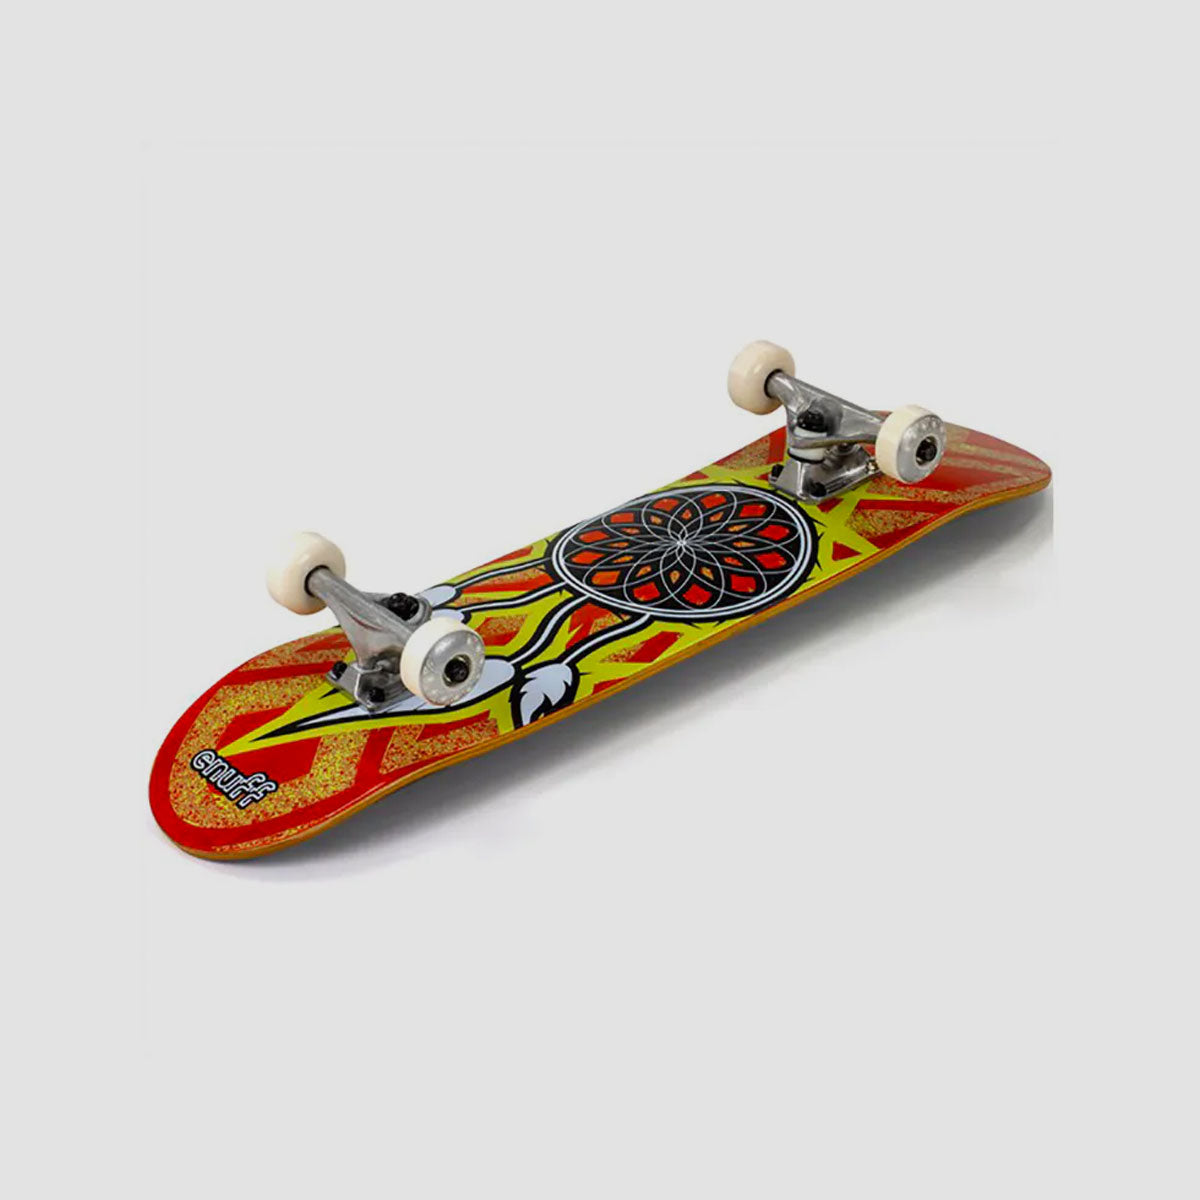 Enuff Dreamcatcher Skateboard Orange/Yellow - 7.75"